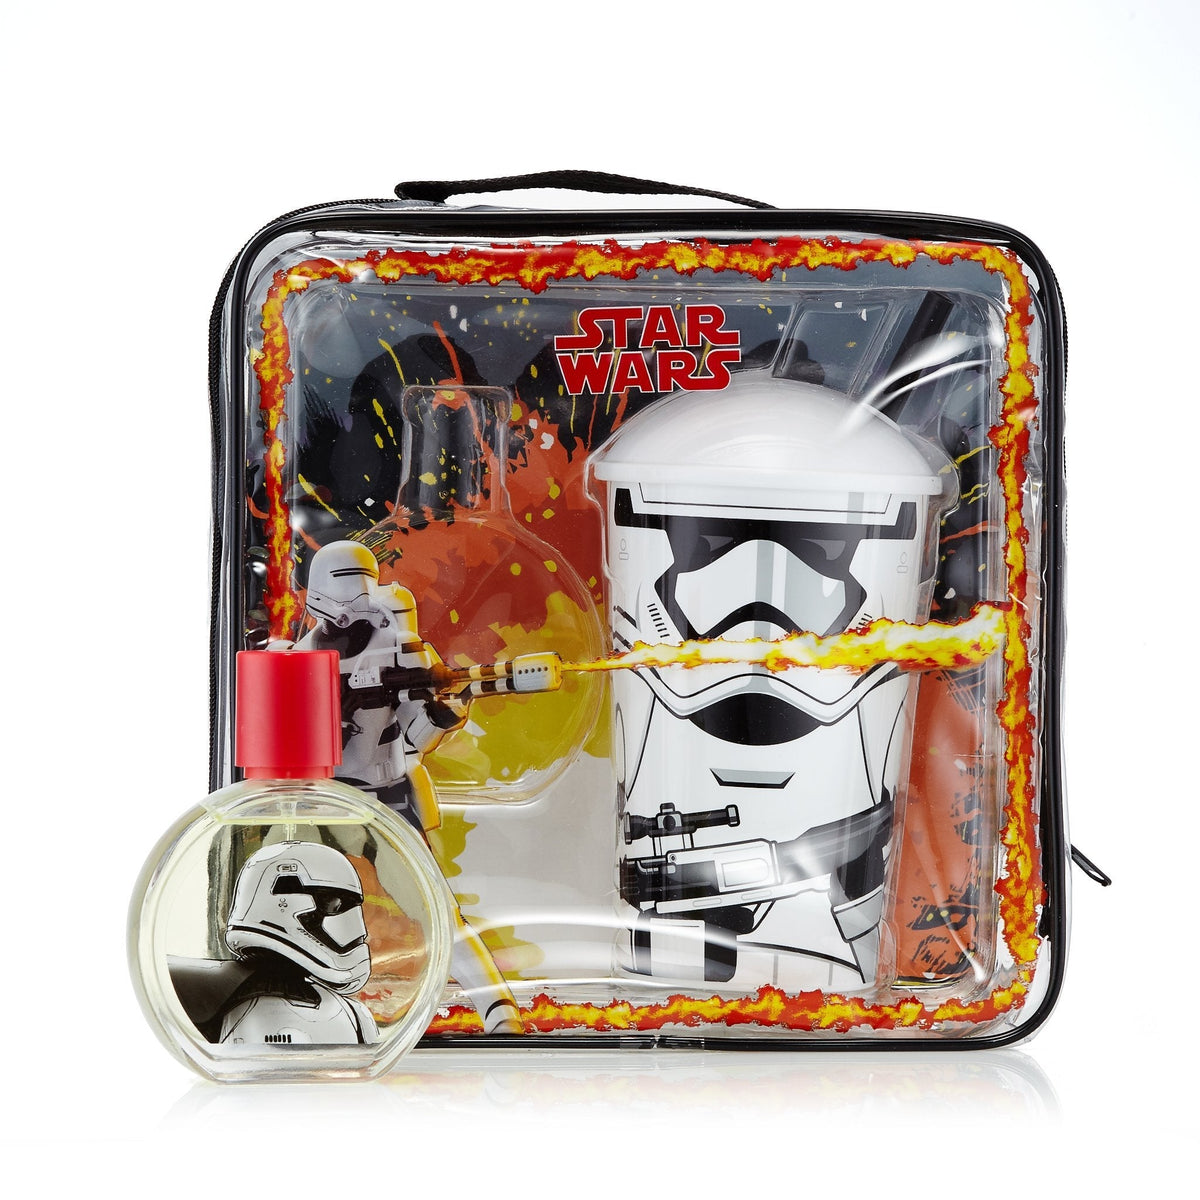 Star Wars Lunch Box Gift Set for Boys by Disney 1.7 oz.